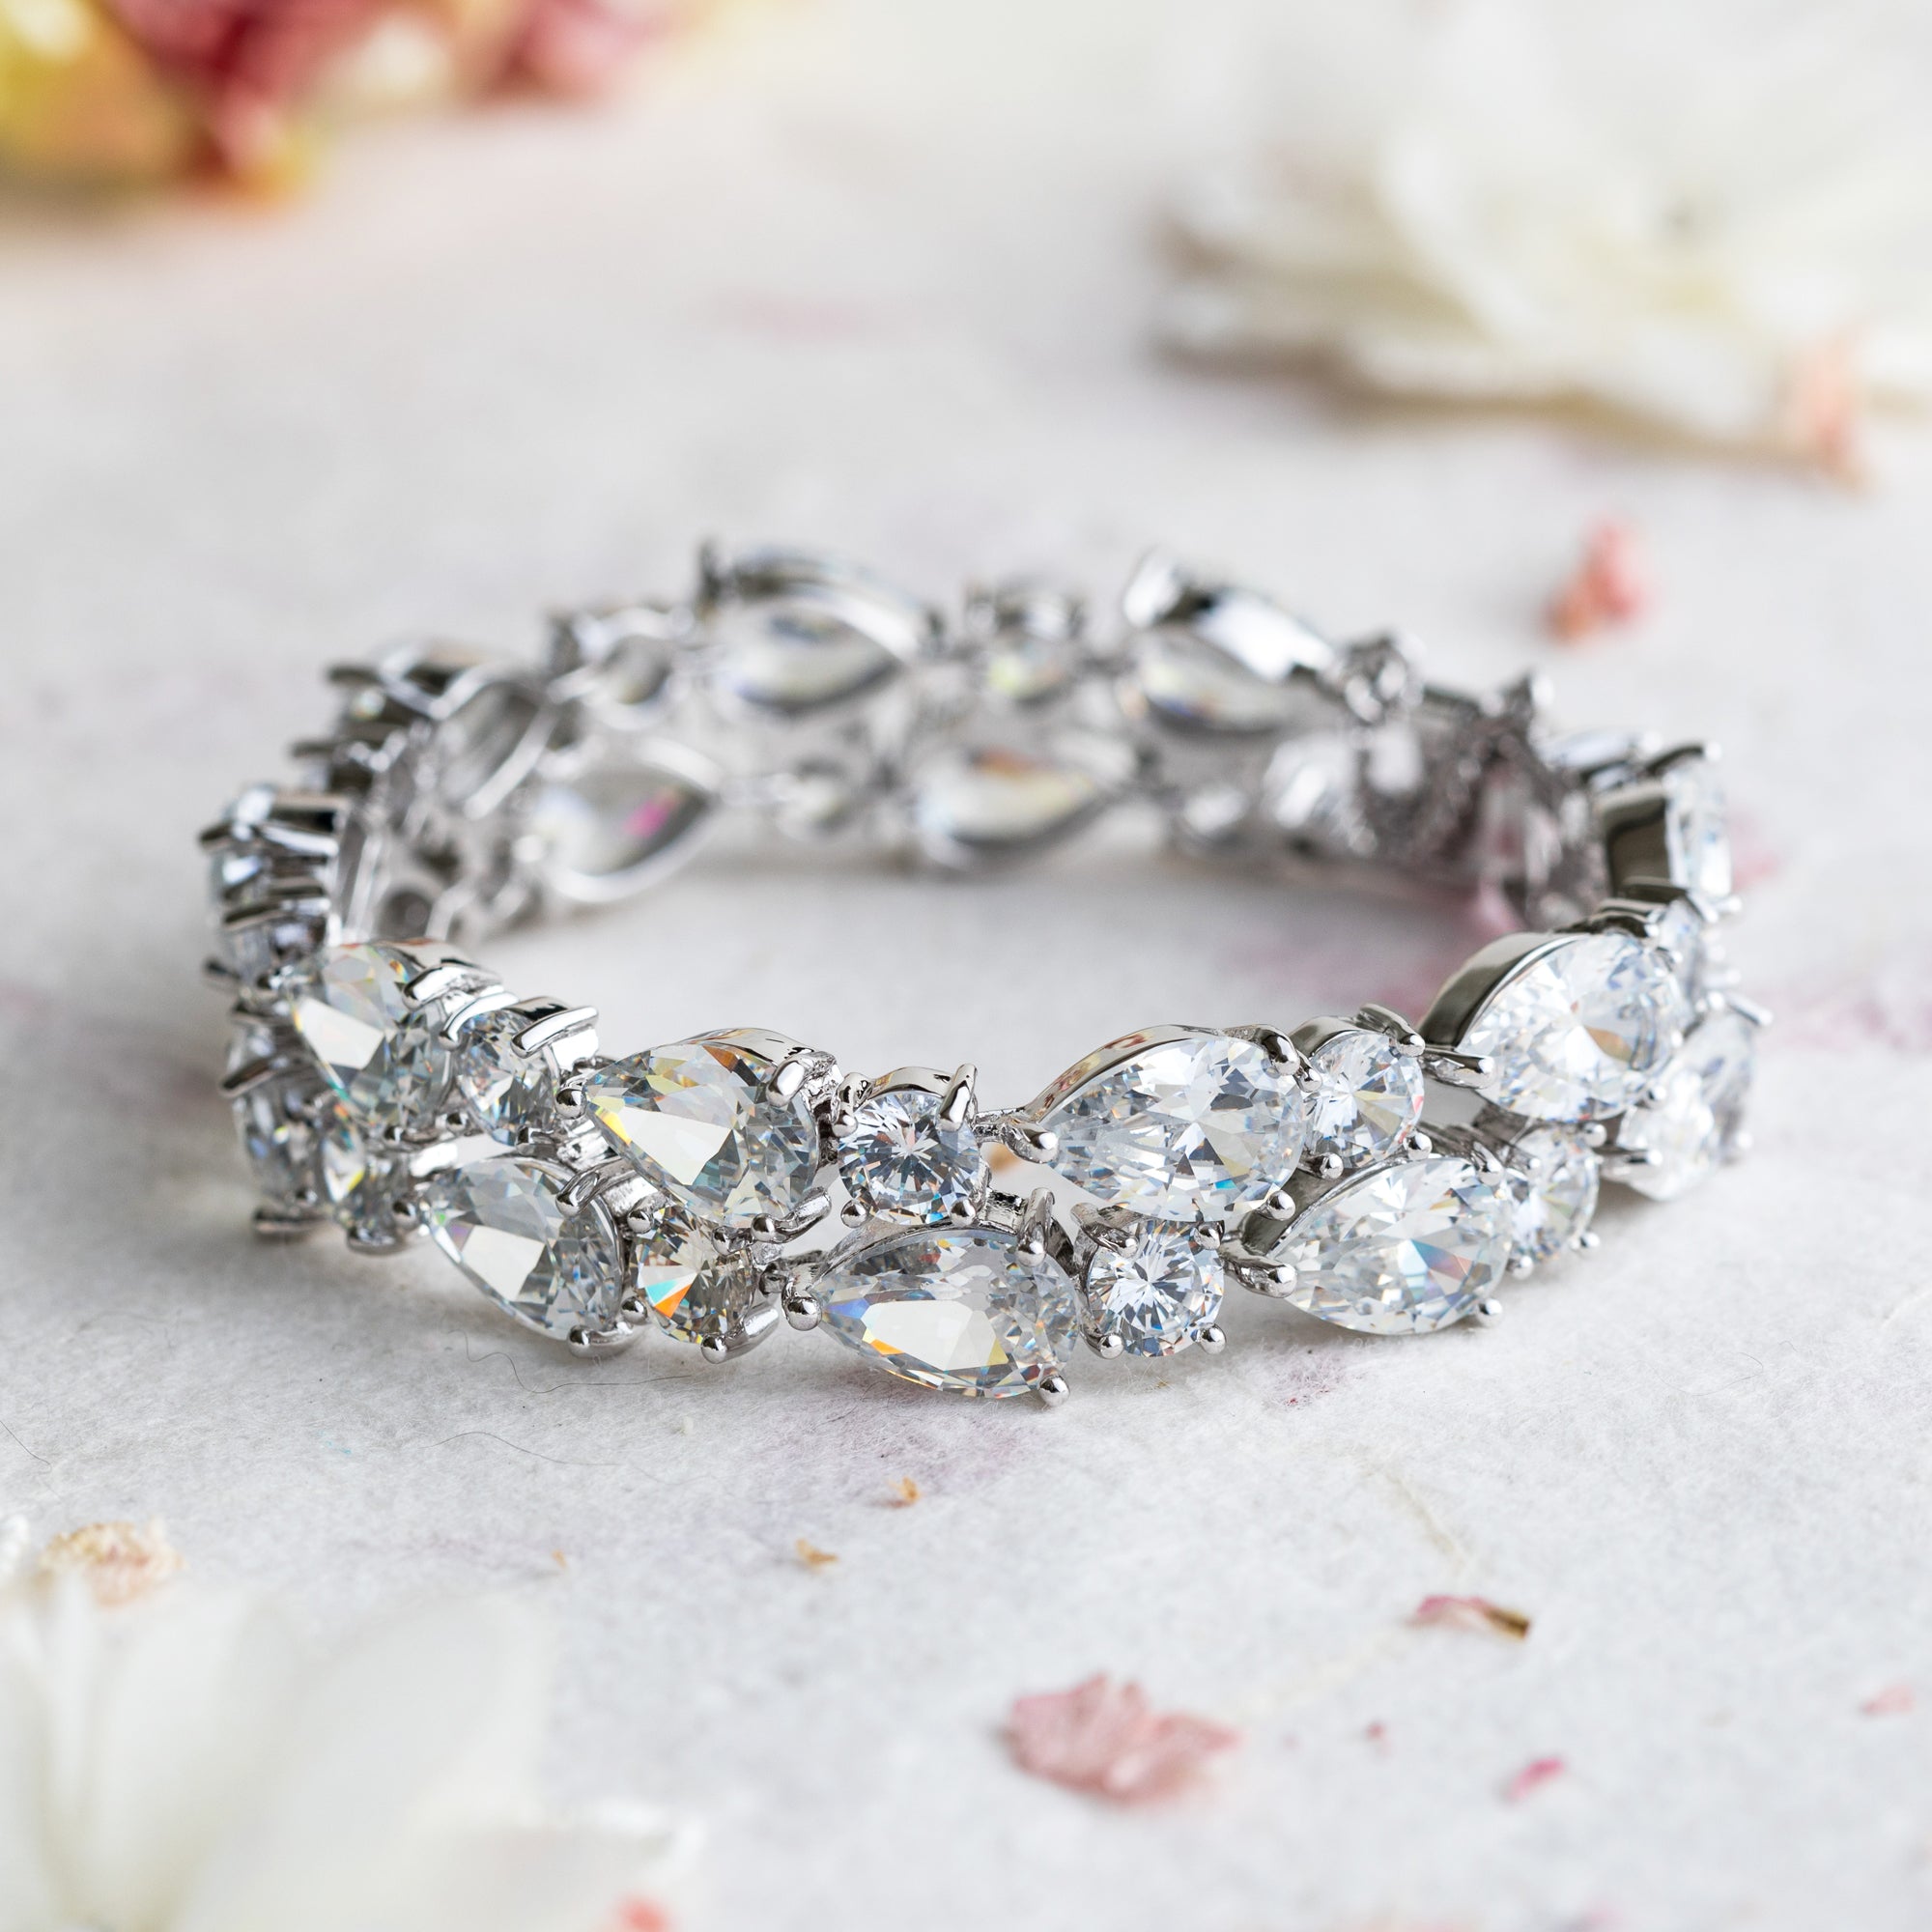 Bonita crystal and silver bracelet